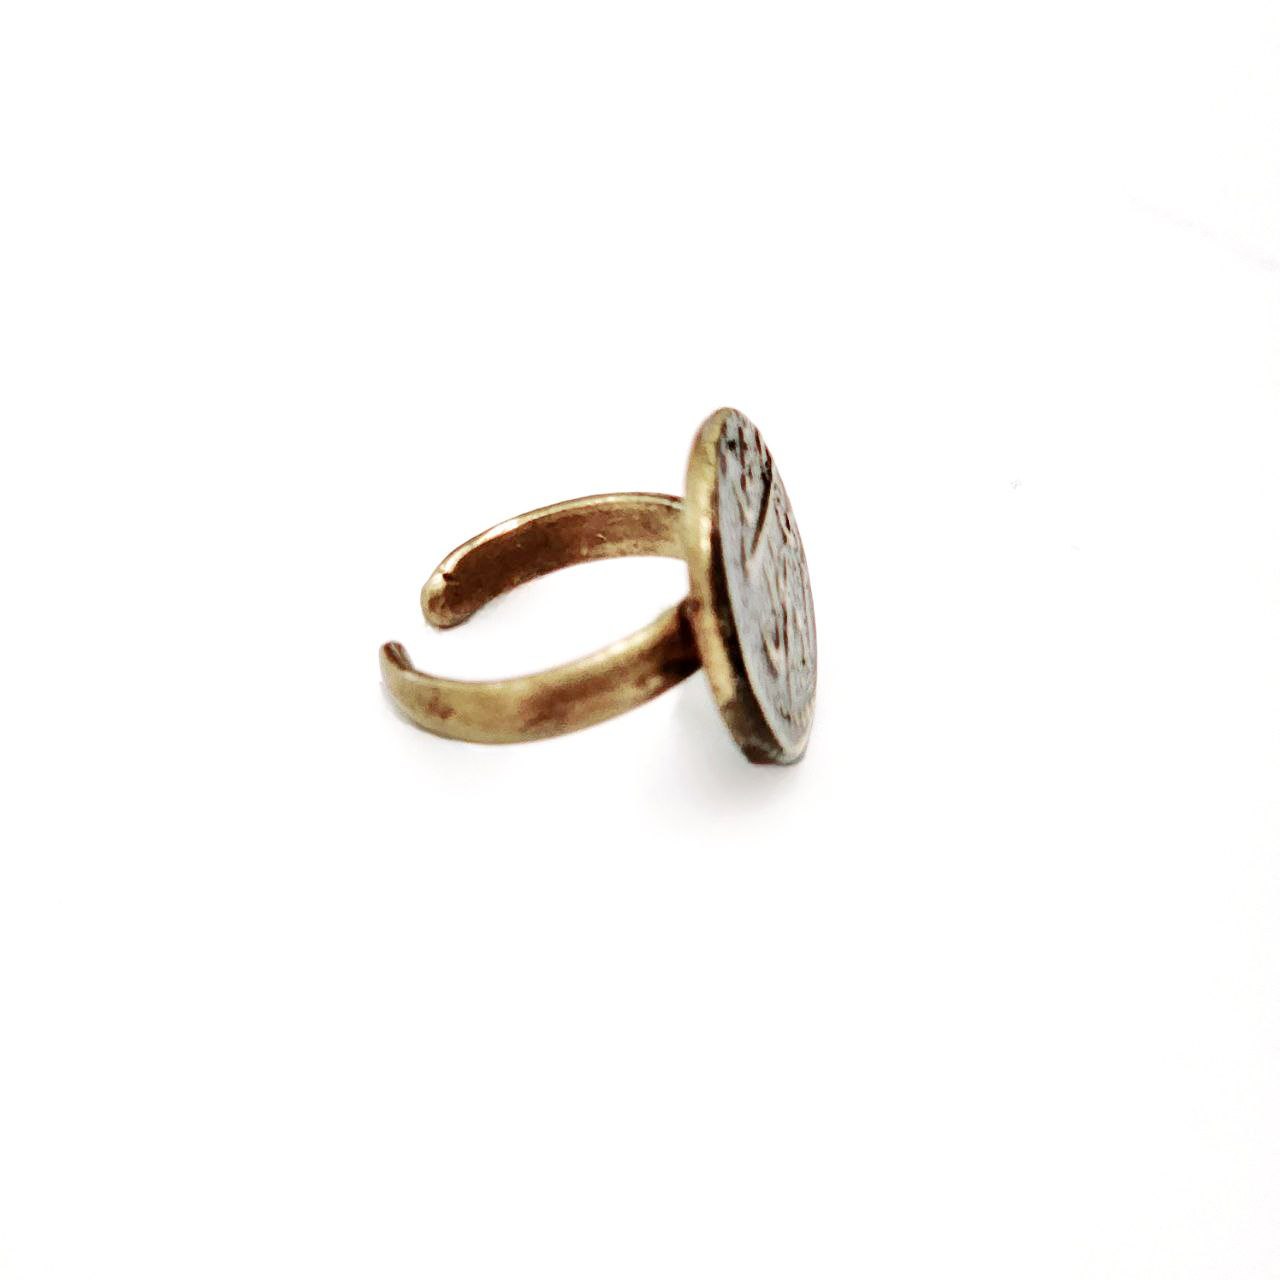 Hand made brass ring